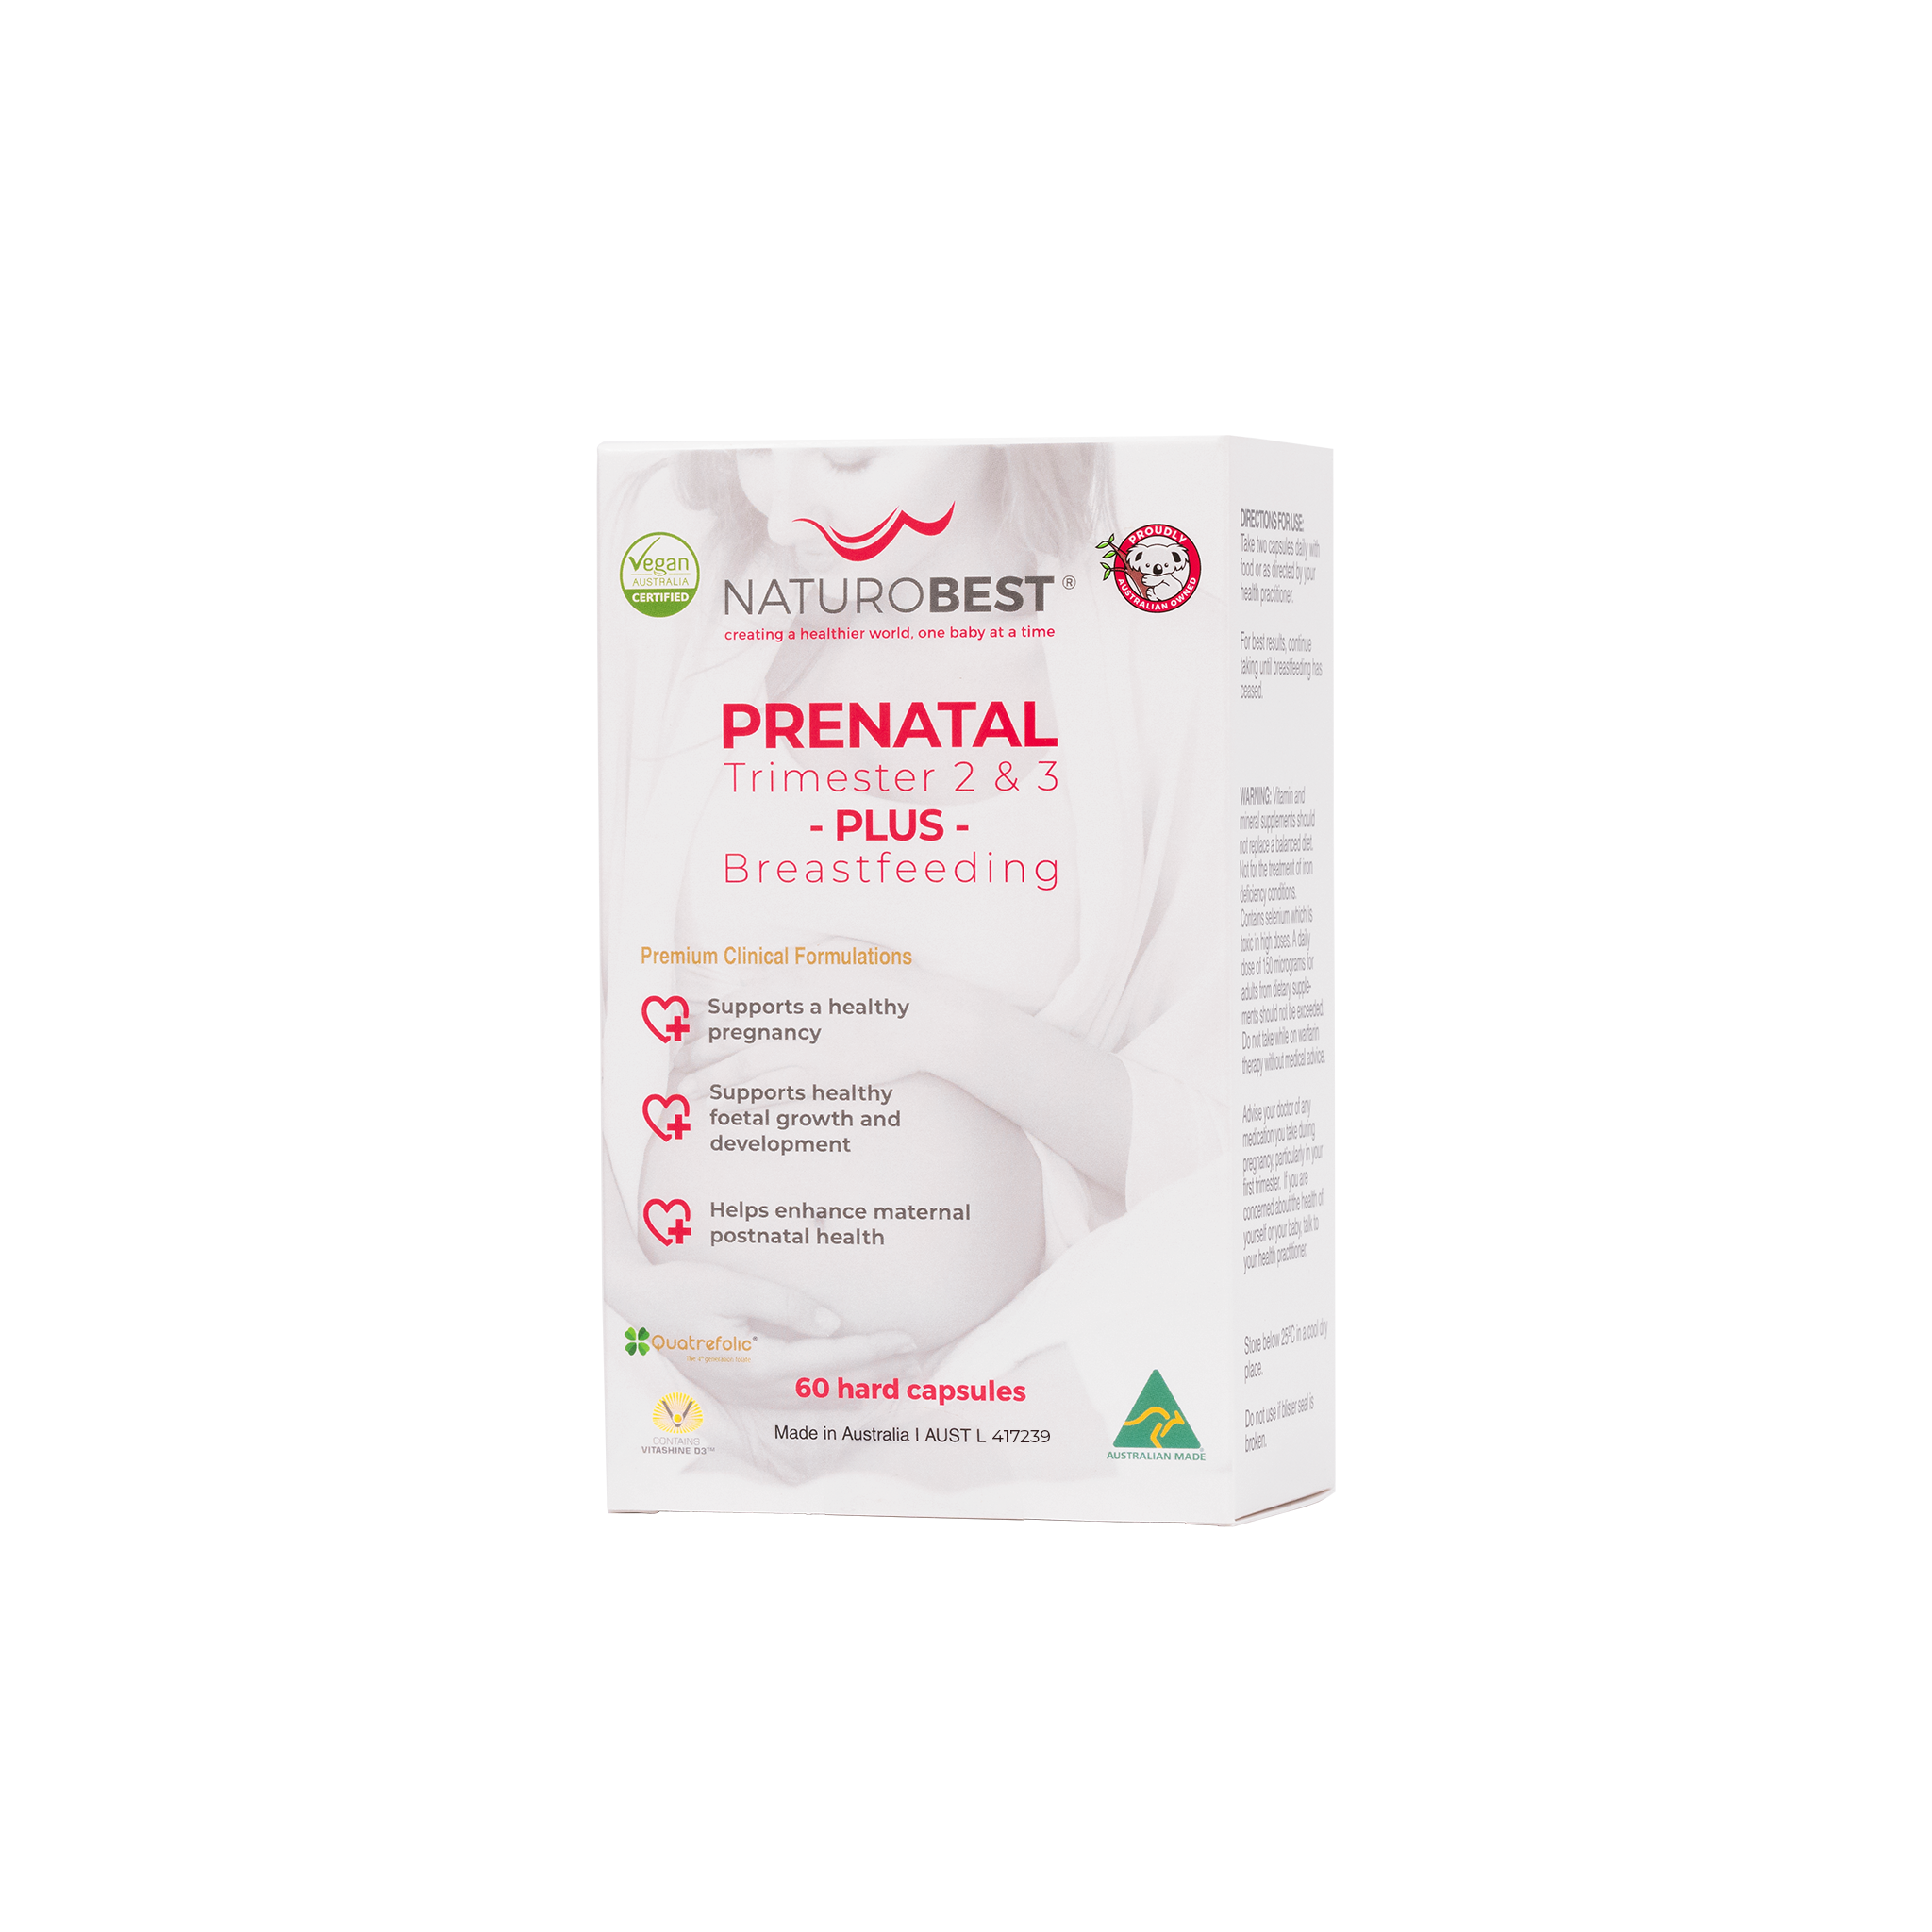 Prenatal Trimester 2 & 3 Plus Breastfeeding - Carton